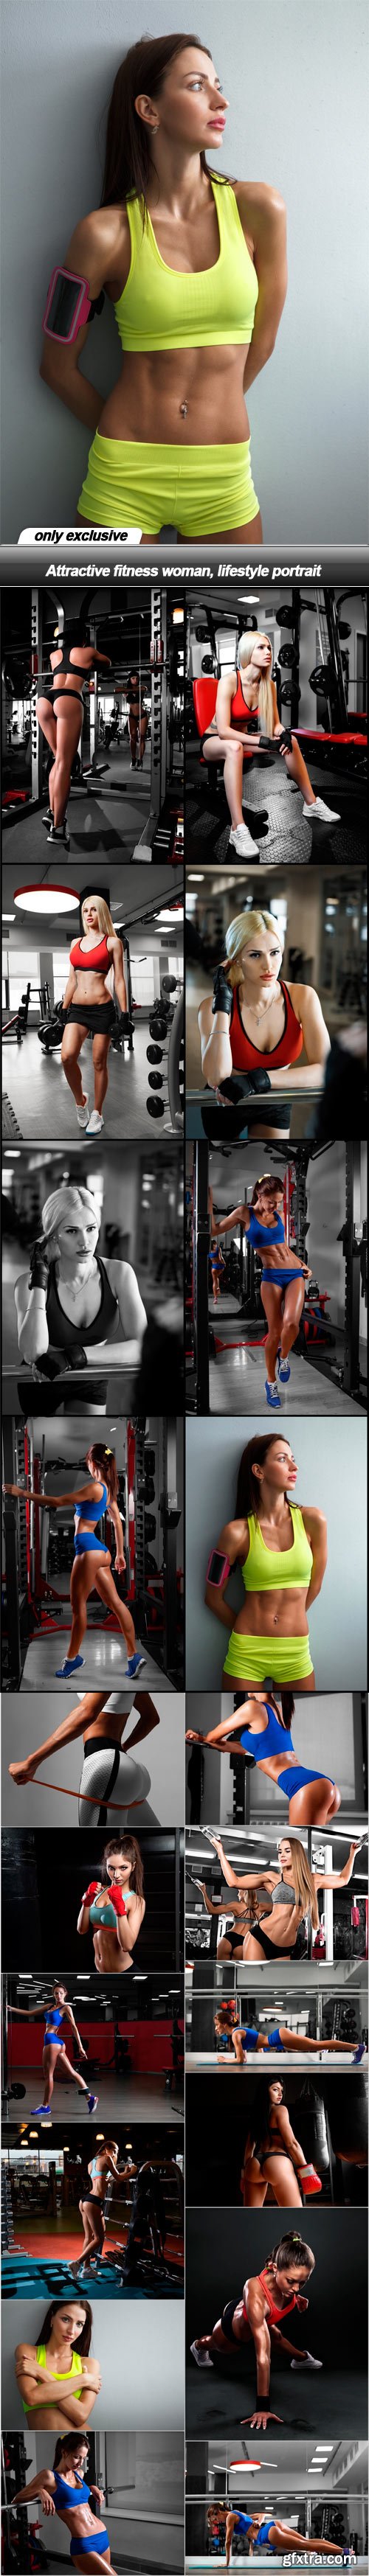 Attractive fitness woman, lifestyle portrait - 20 UHQ JPEG